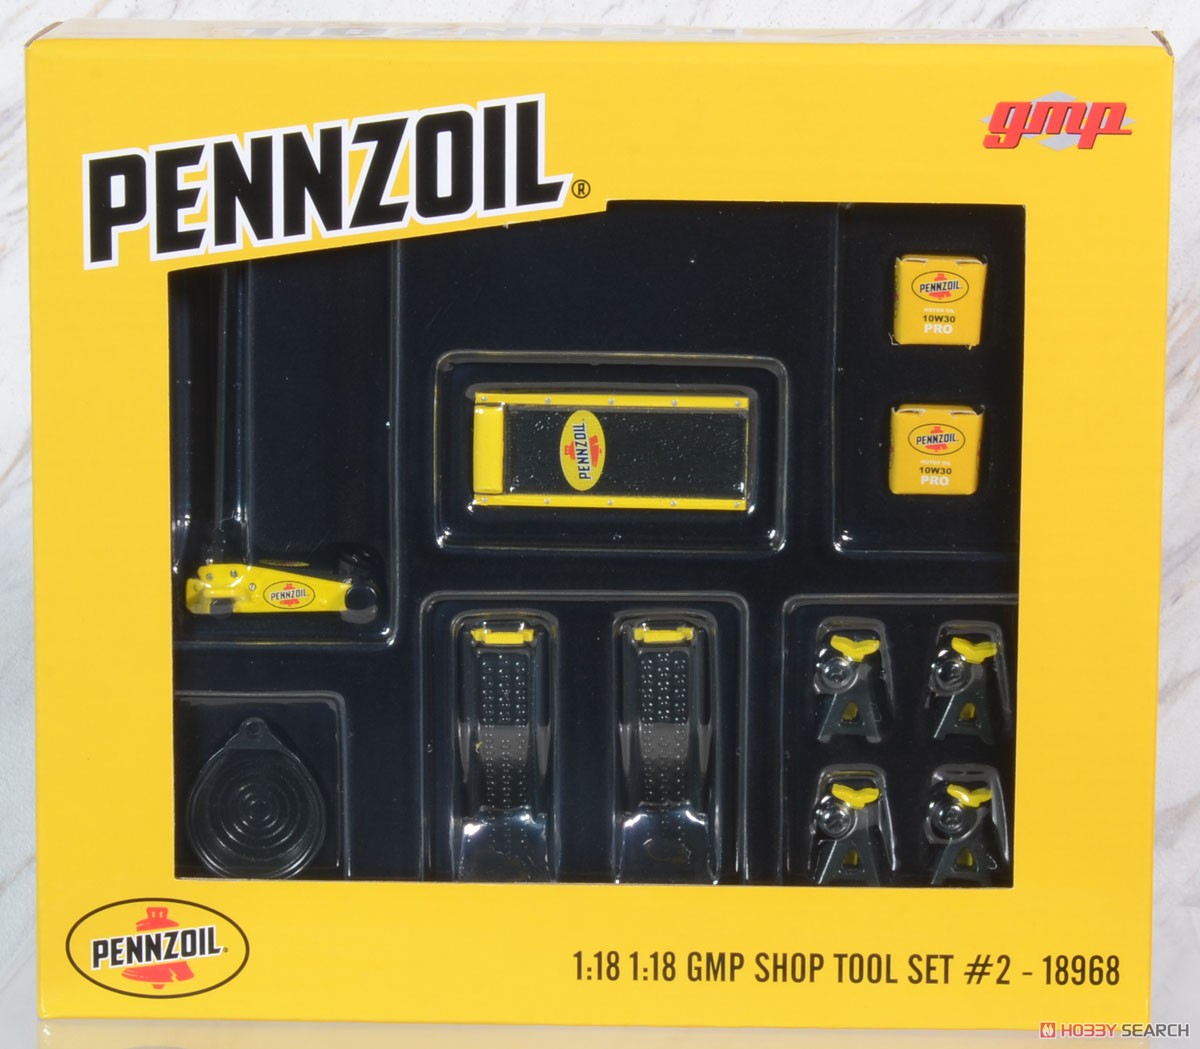 GMP Shop Tool Set #2 - Pennzoil (ミニカー) パッケージ1